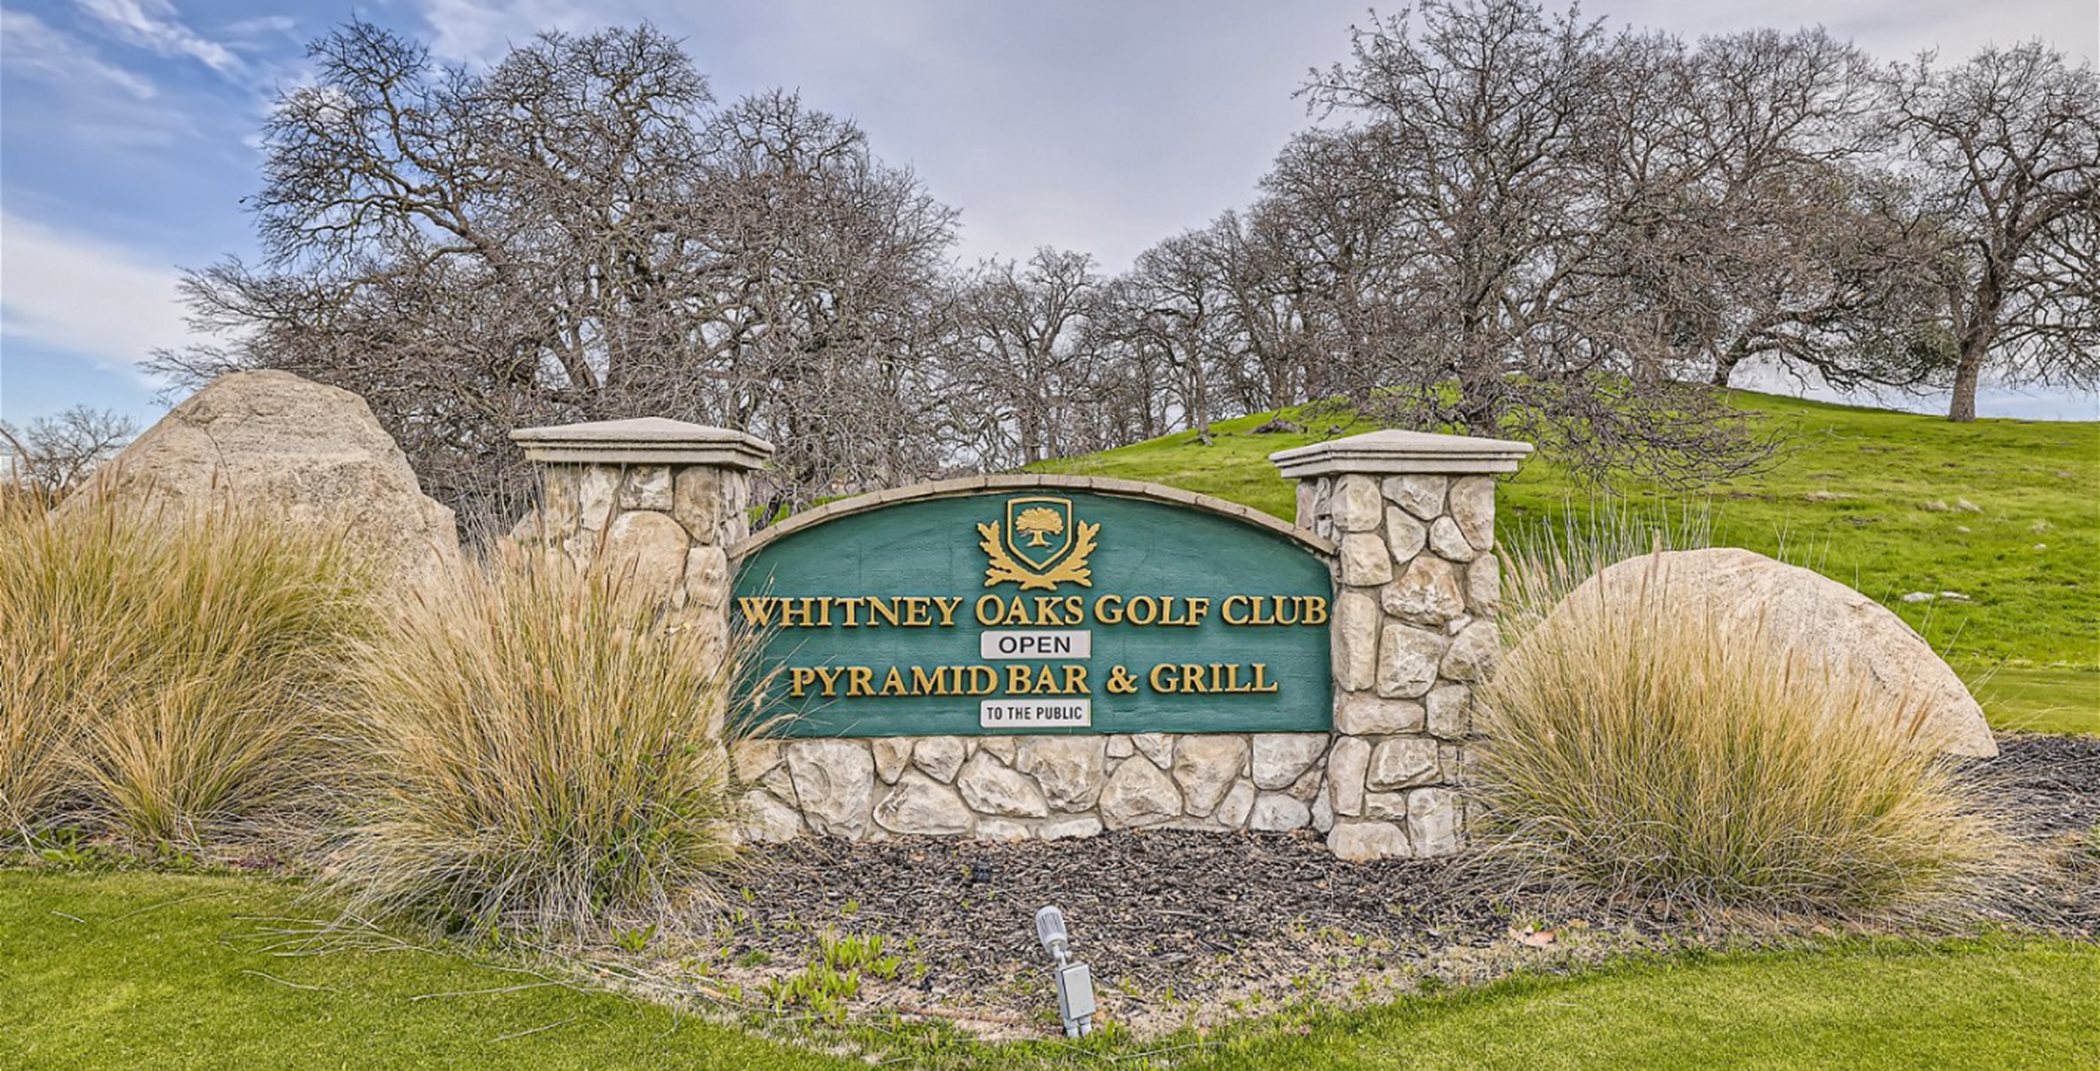 Whitney Oaks Golf Club sign